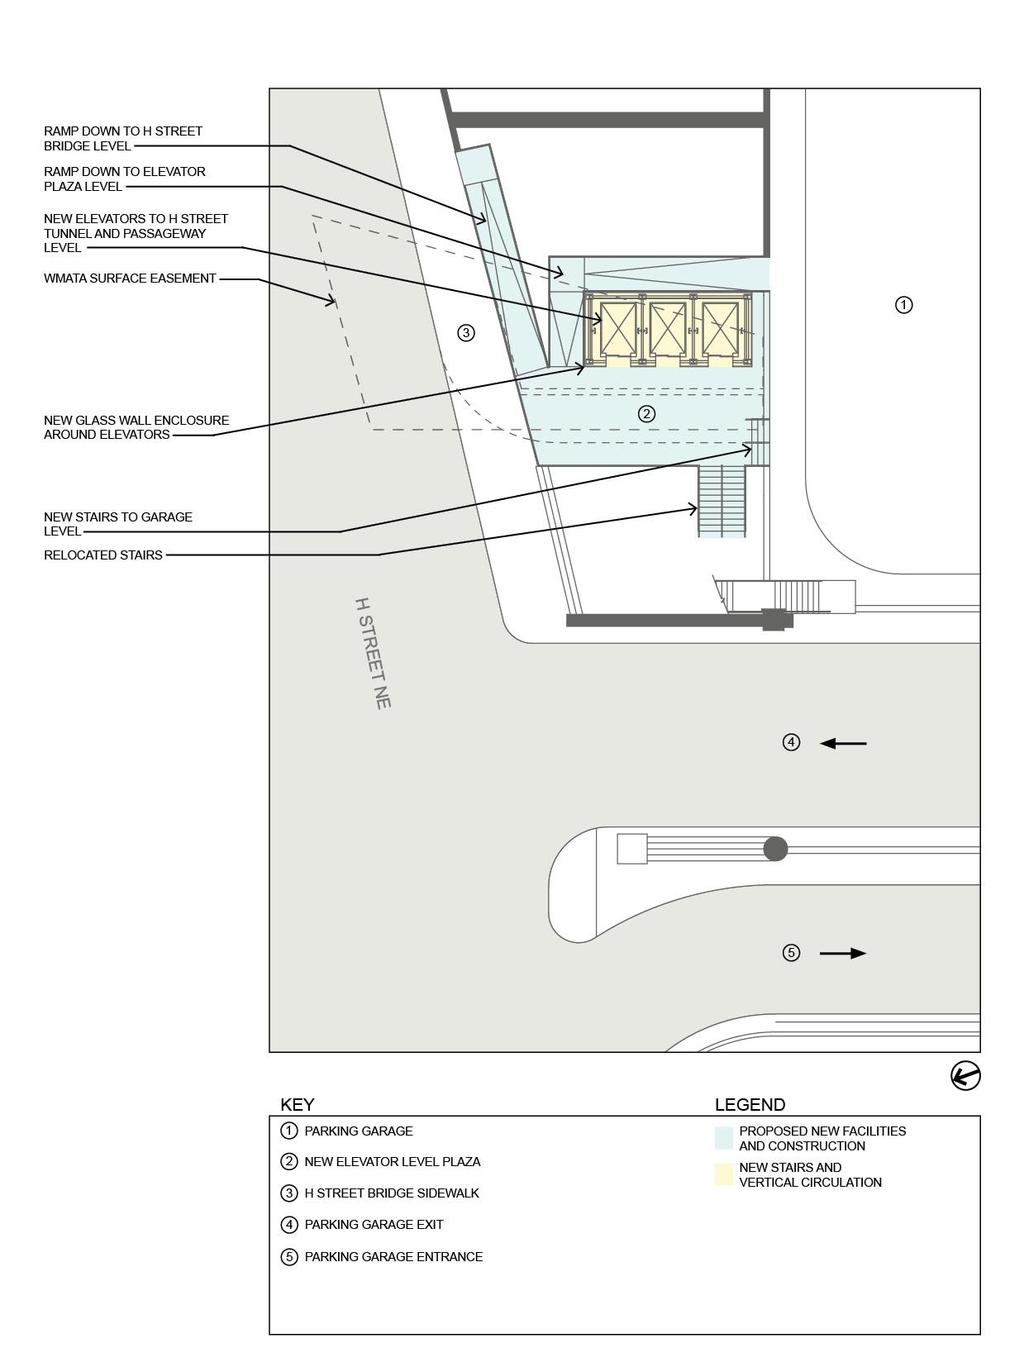 Figure 15: Proposed Partial Build H Street